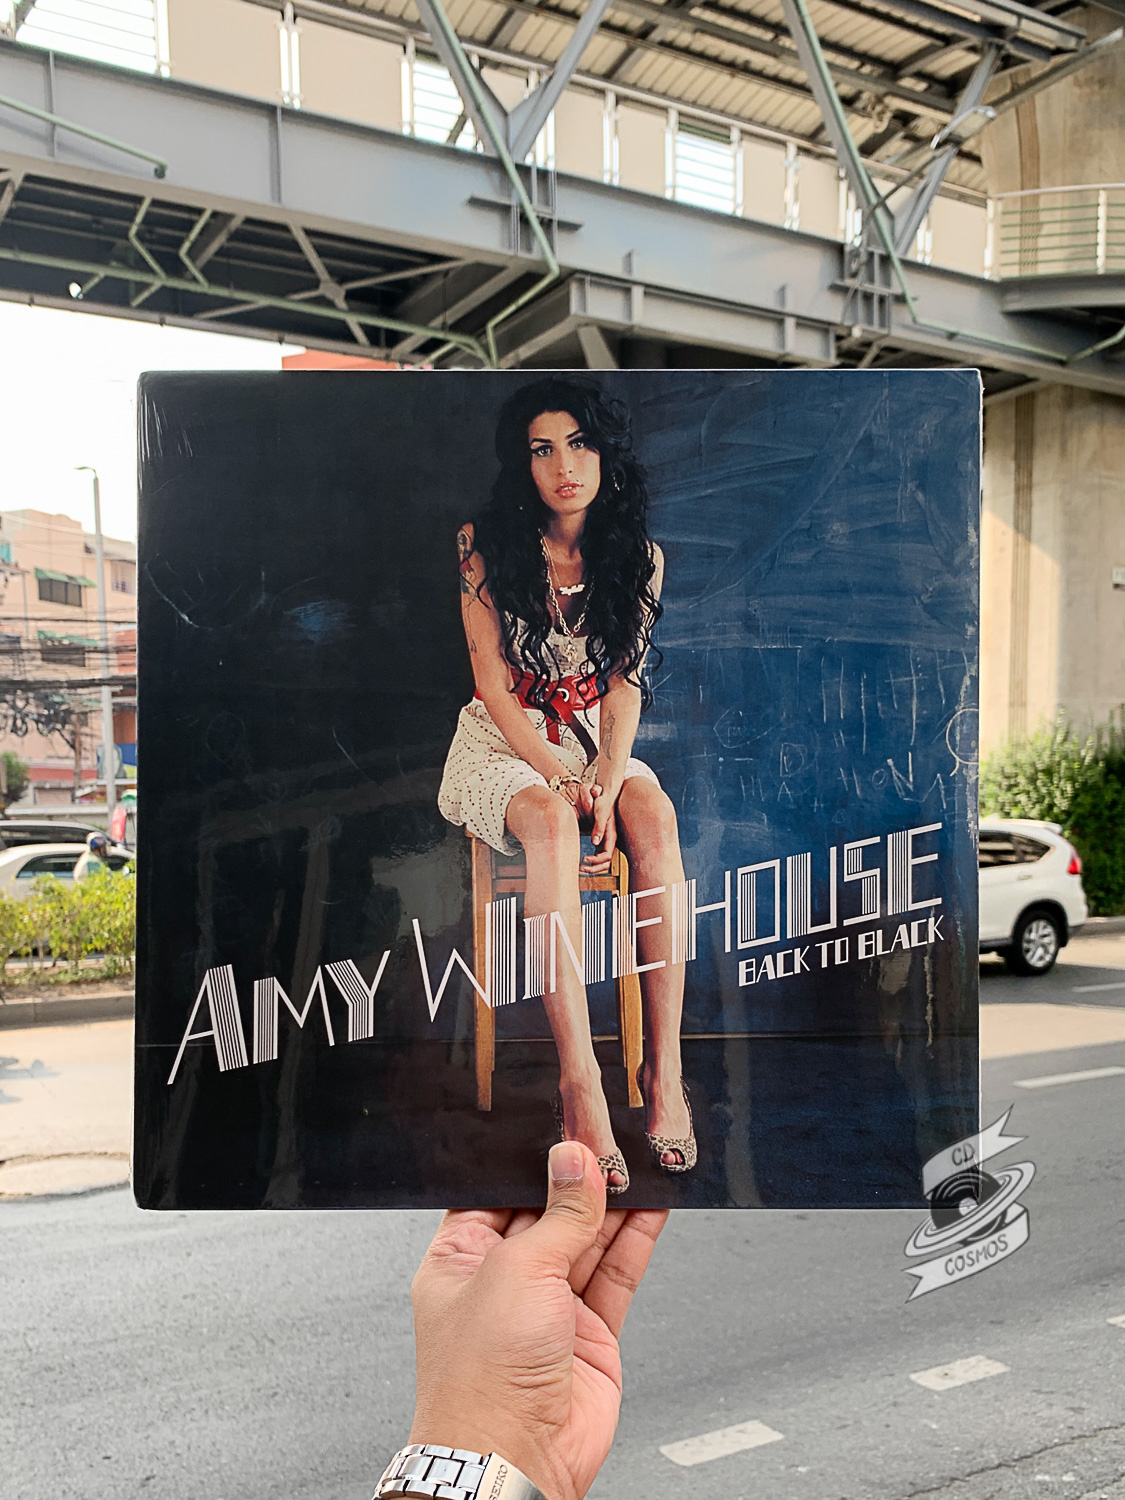 Amy Winehouse BACK TO BLACK CD